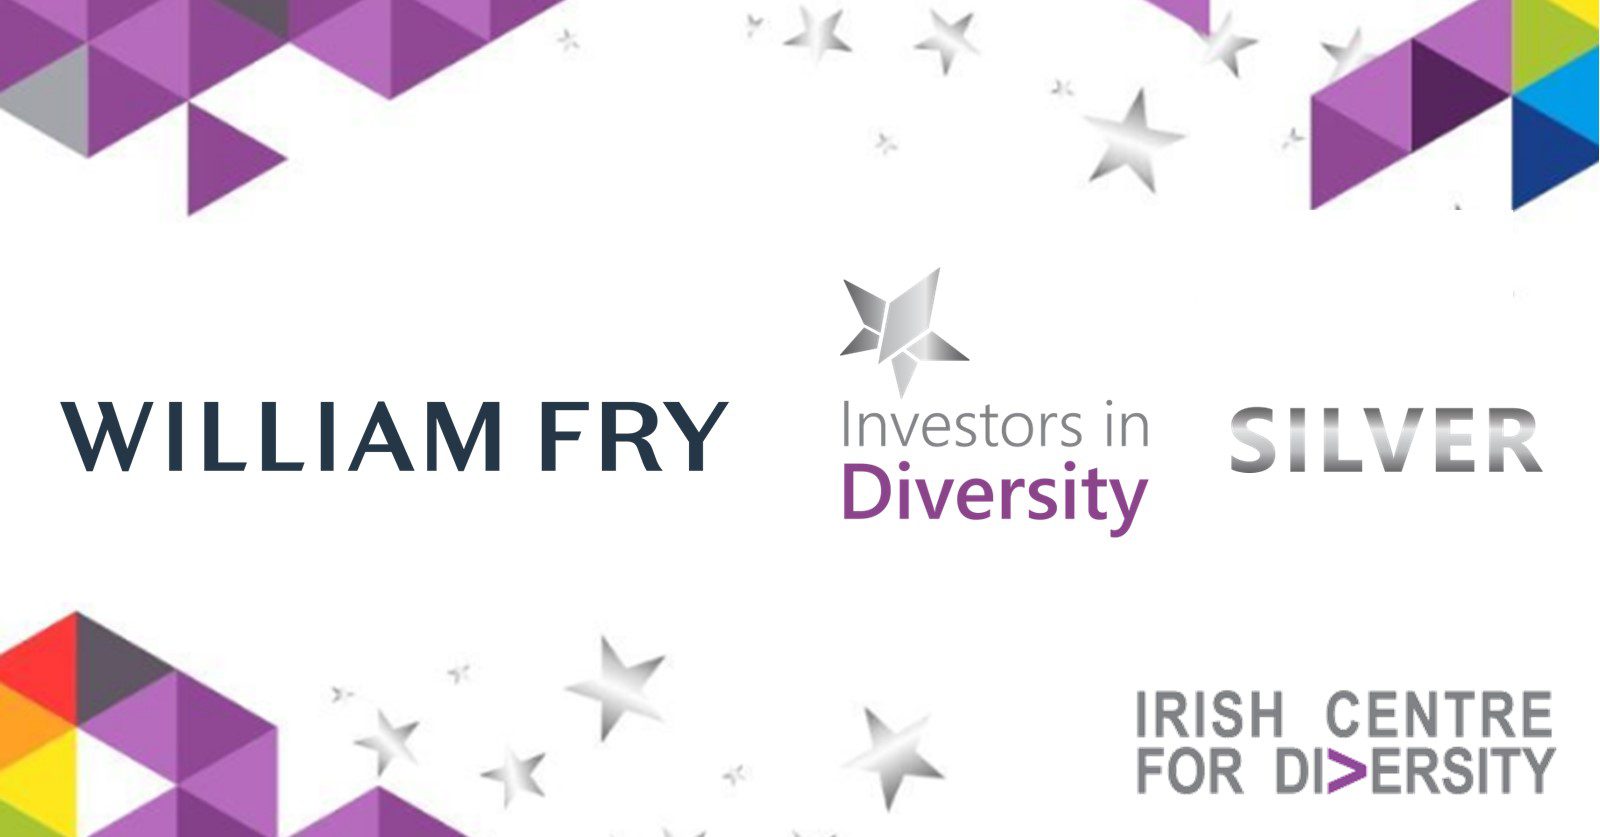 WF Investors in Diversity 23